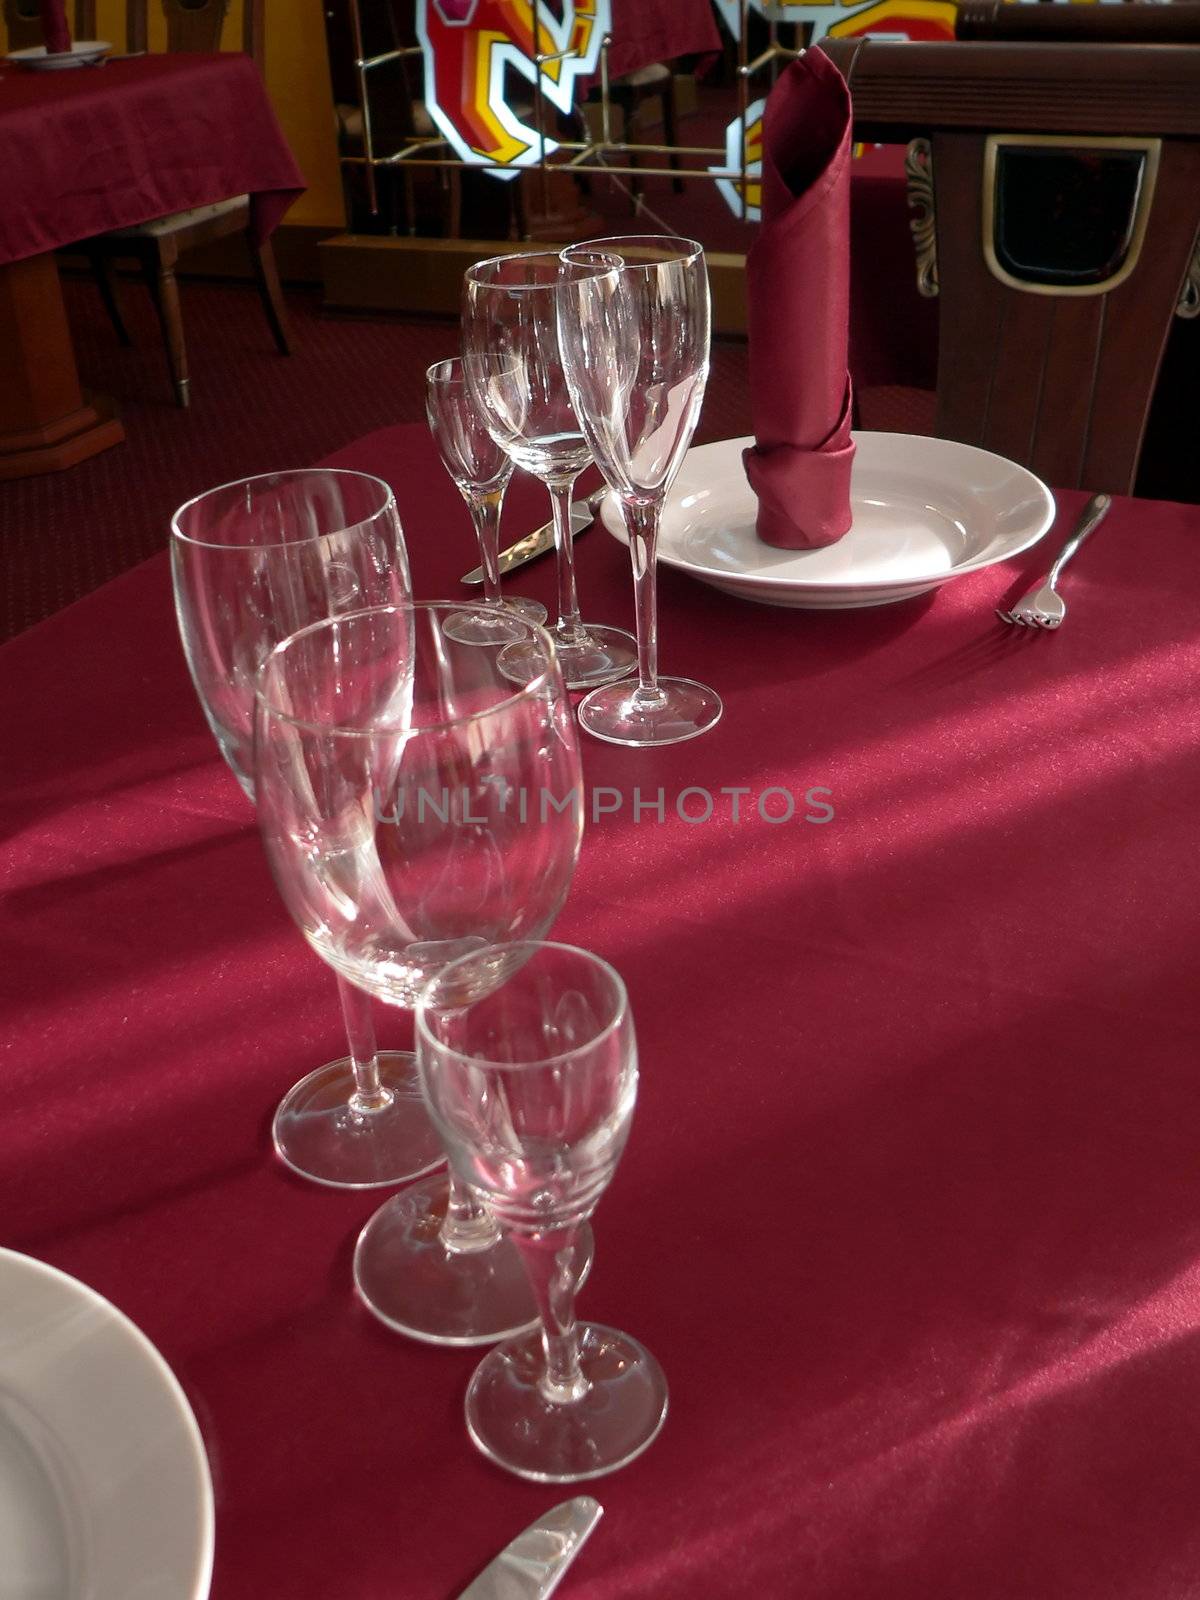 Wineglasses  by ichip